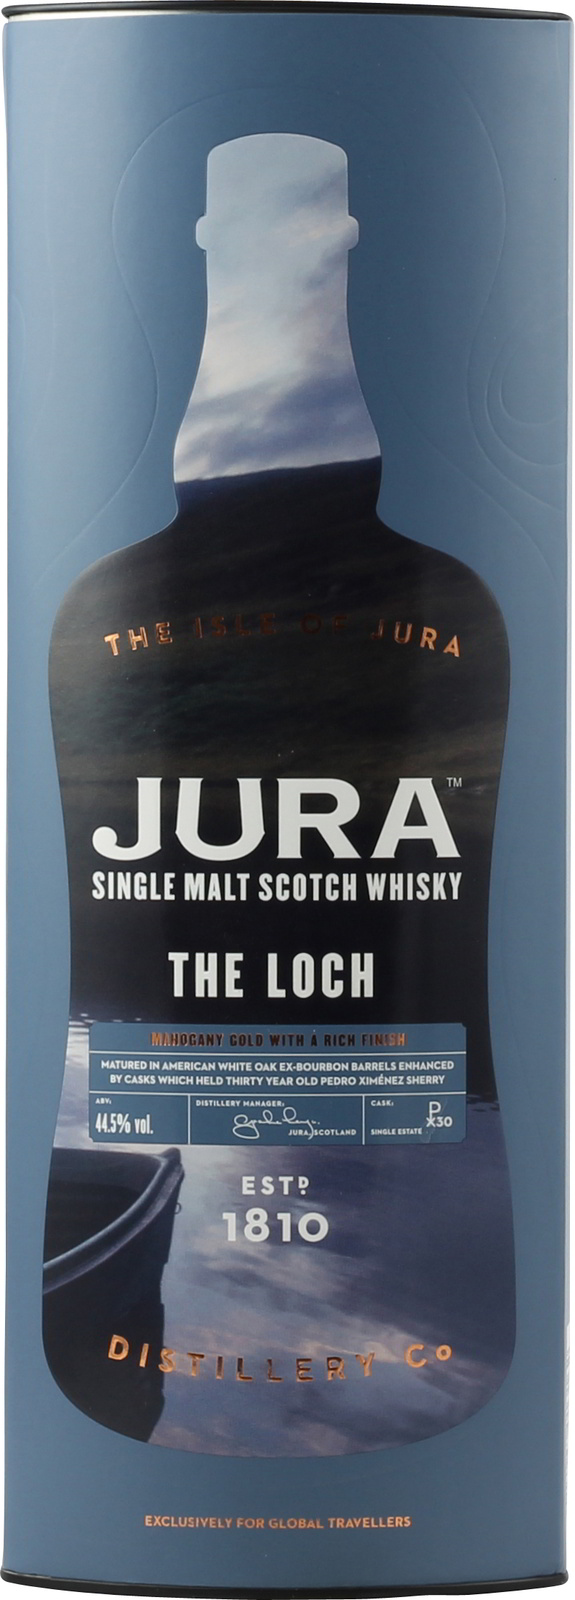 Isle of Jura The Loch Whisky